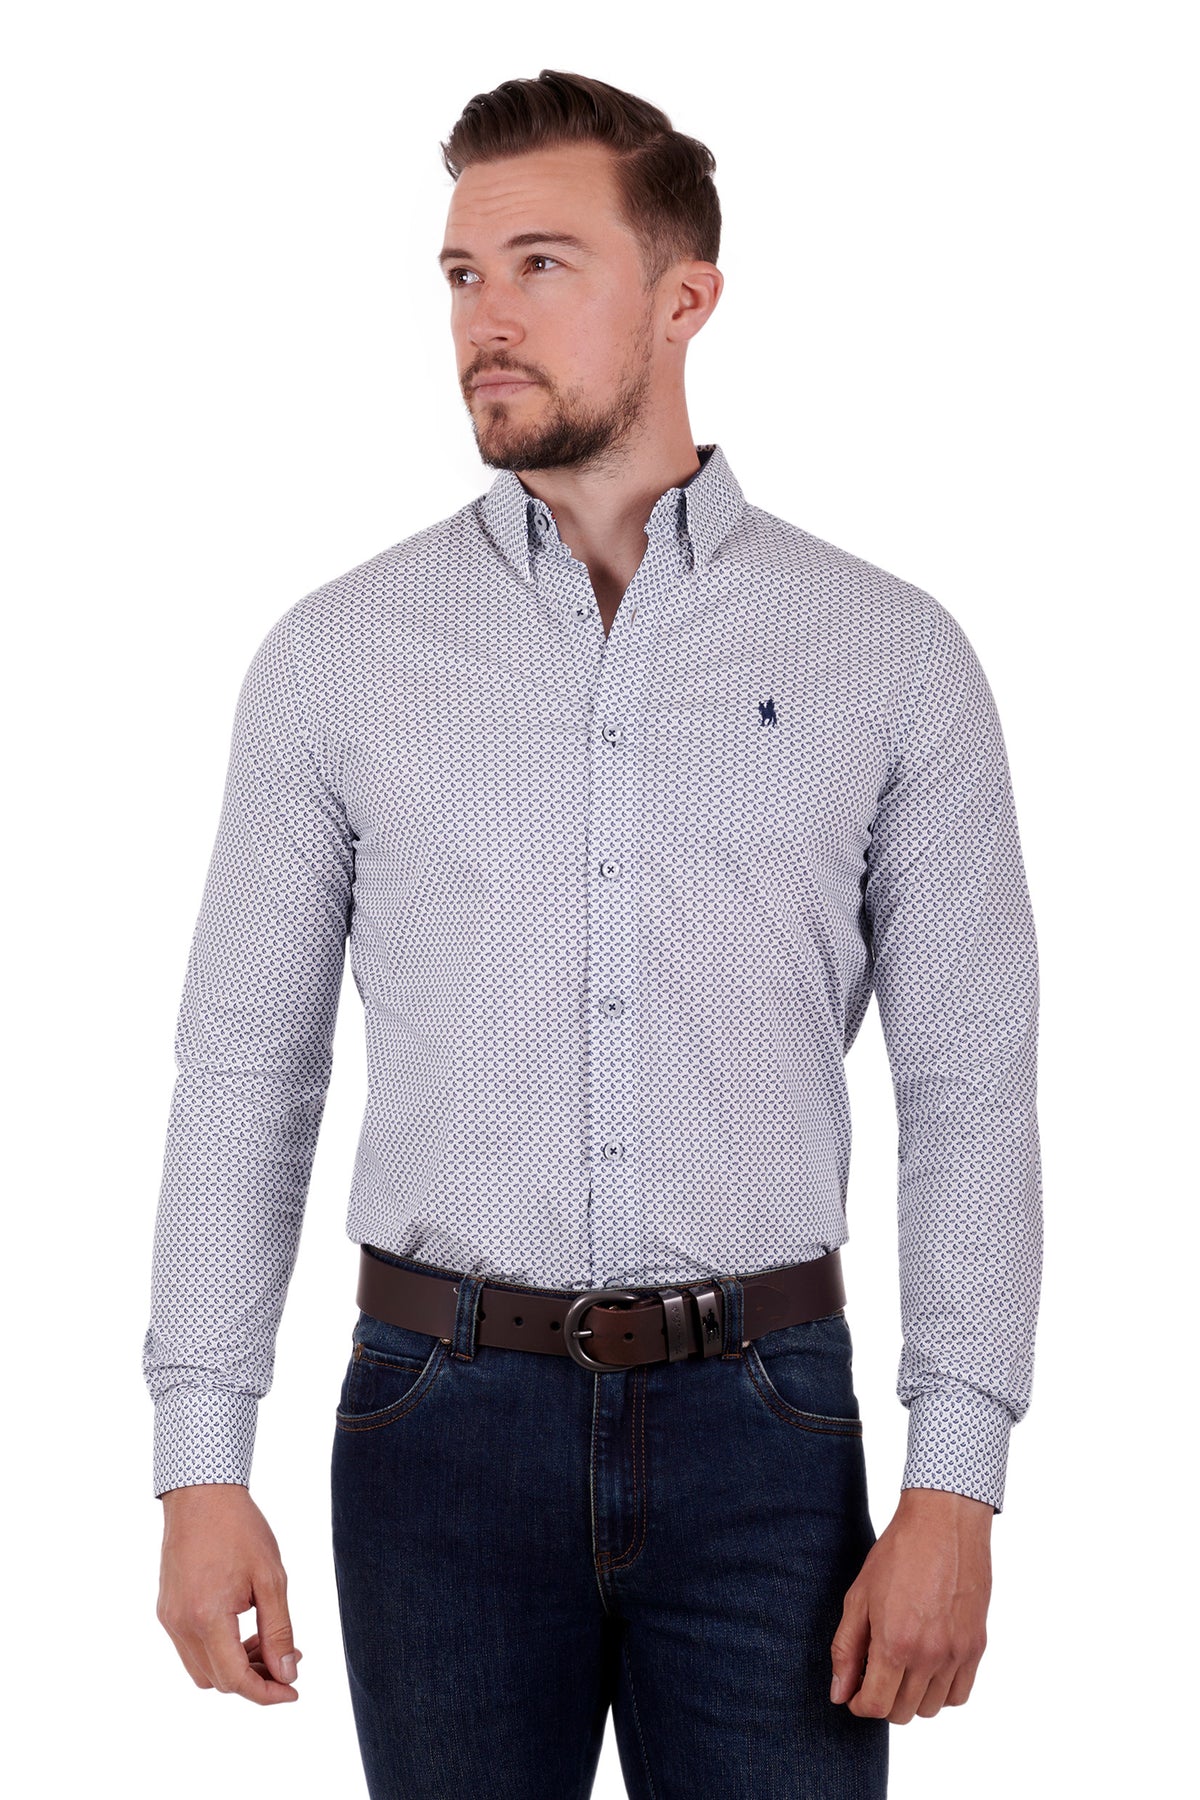 Thomas Cook Mens Sean Tailored Shirt - Navy/White